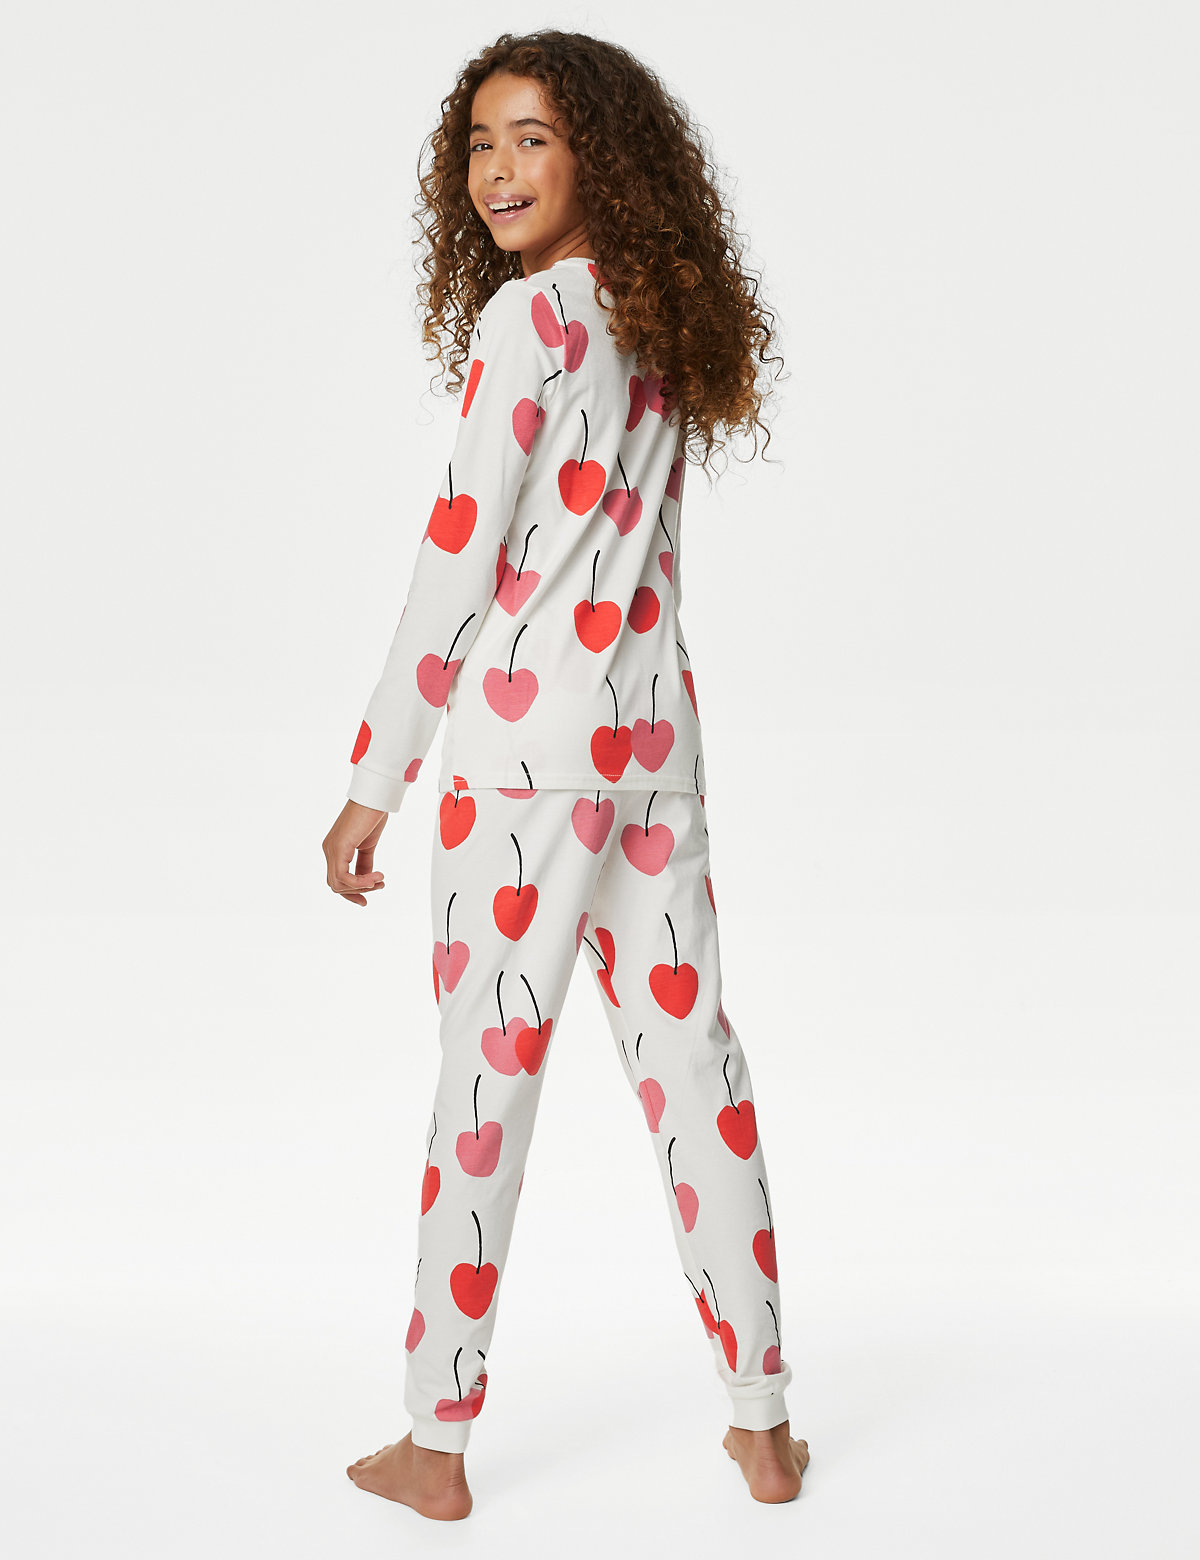 Cotton Rich Cherry Print Pyjamas (7-14 Yrs)